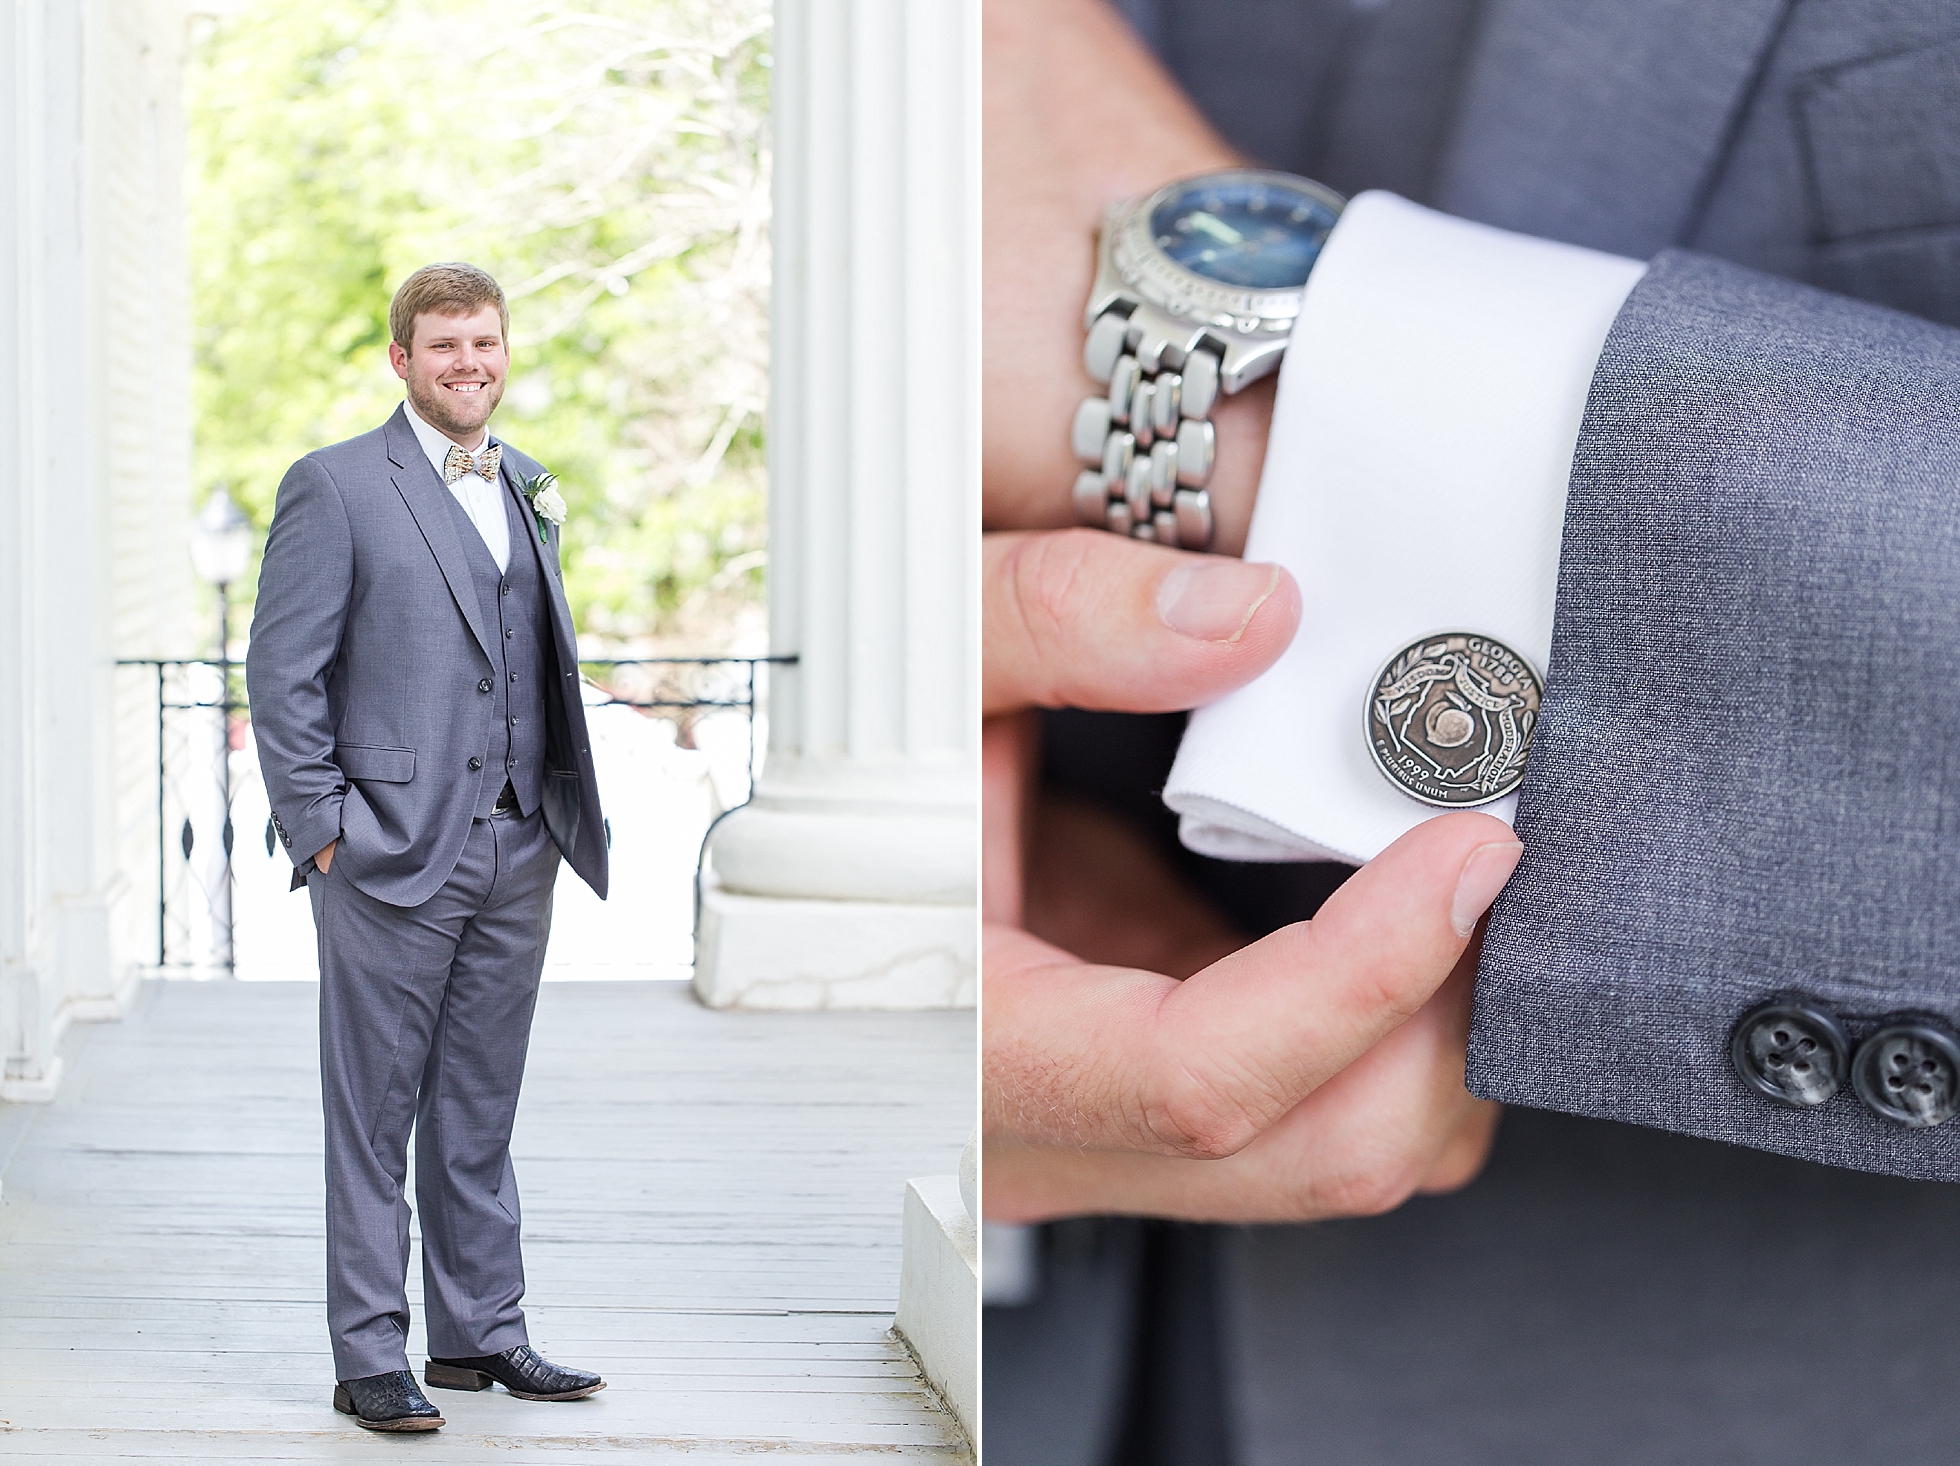 Athens Round Black Silver Cufflinks Formal Wear for Suit Shirt Wedding Dinner 